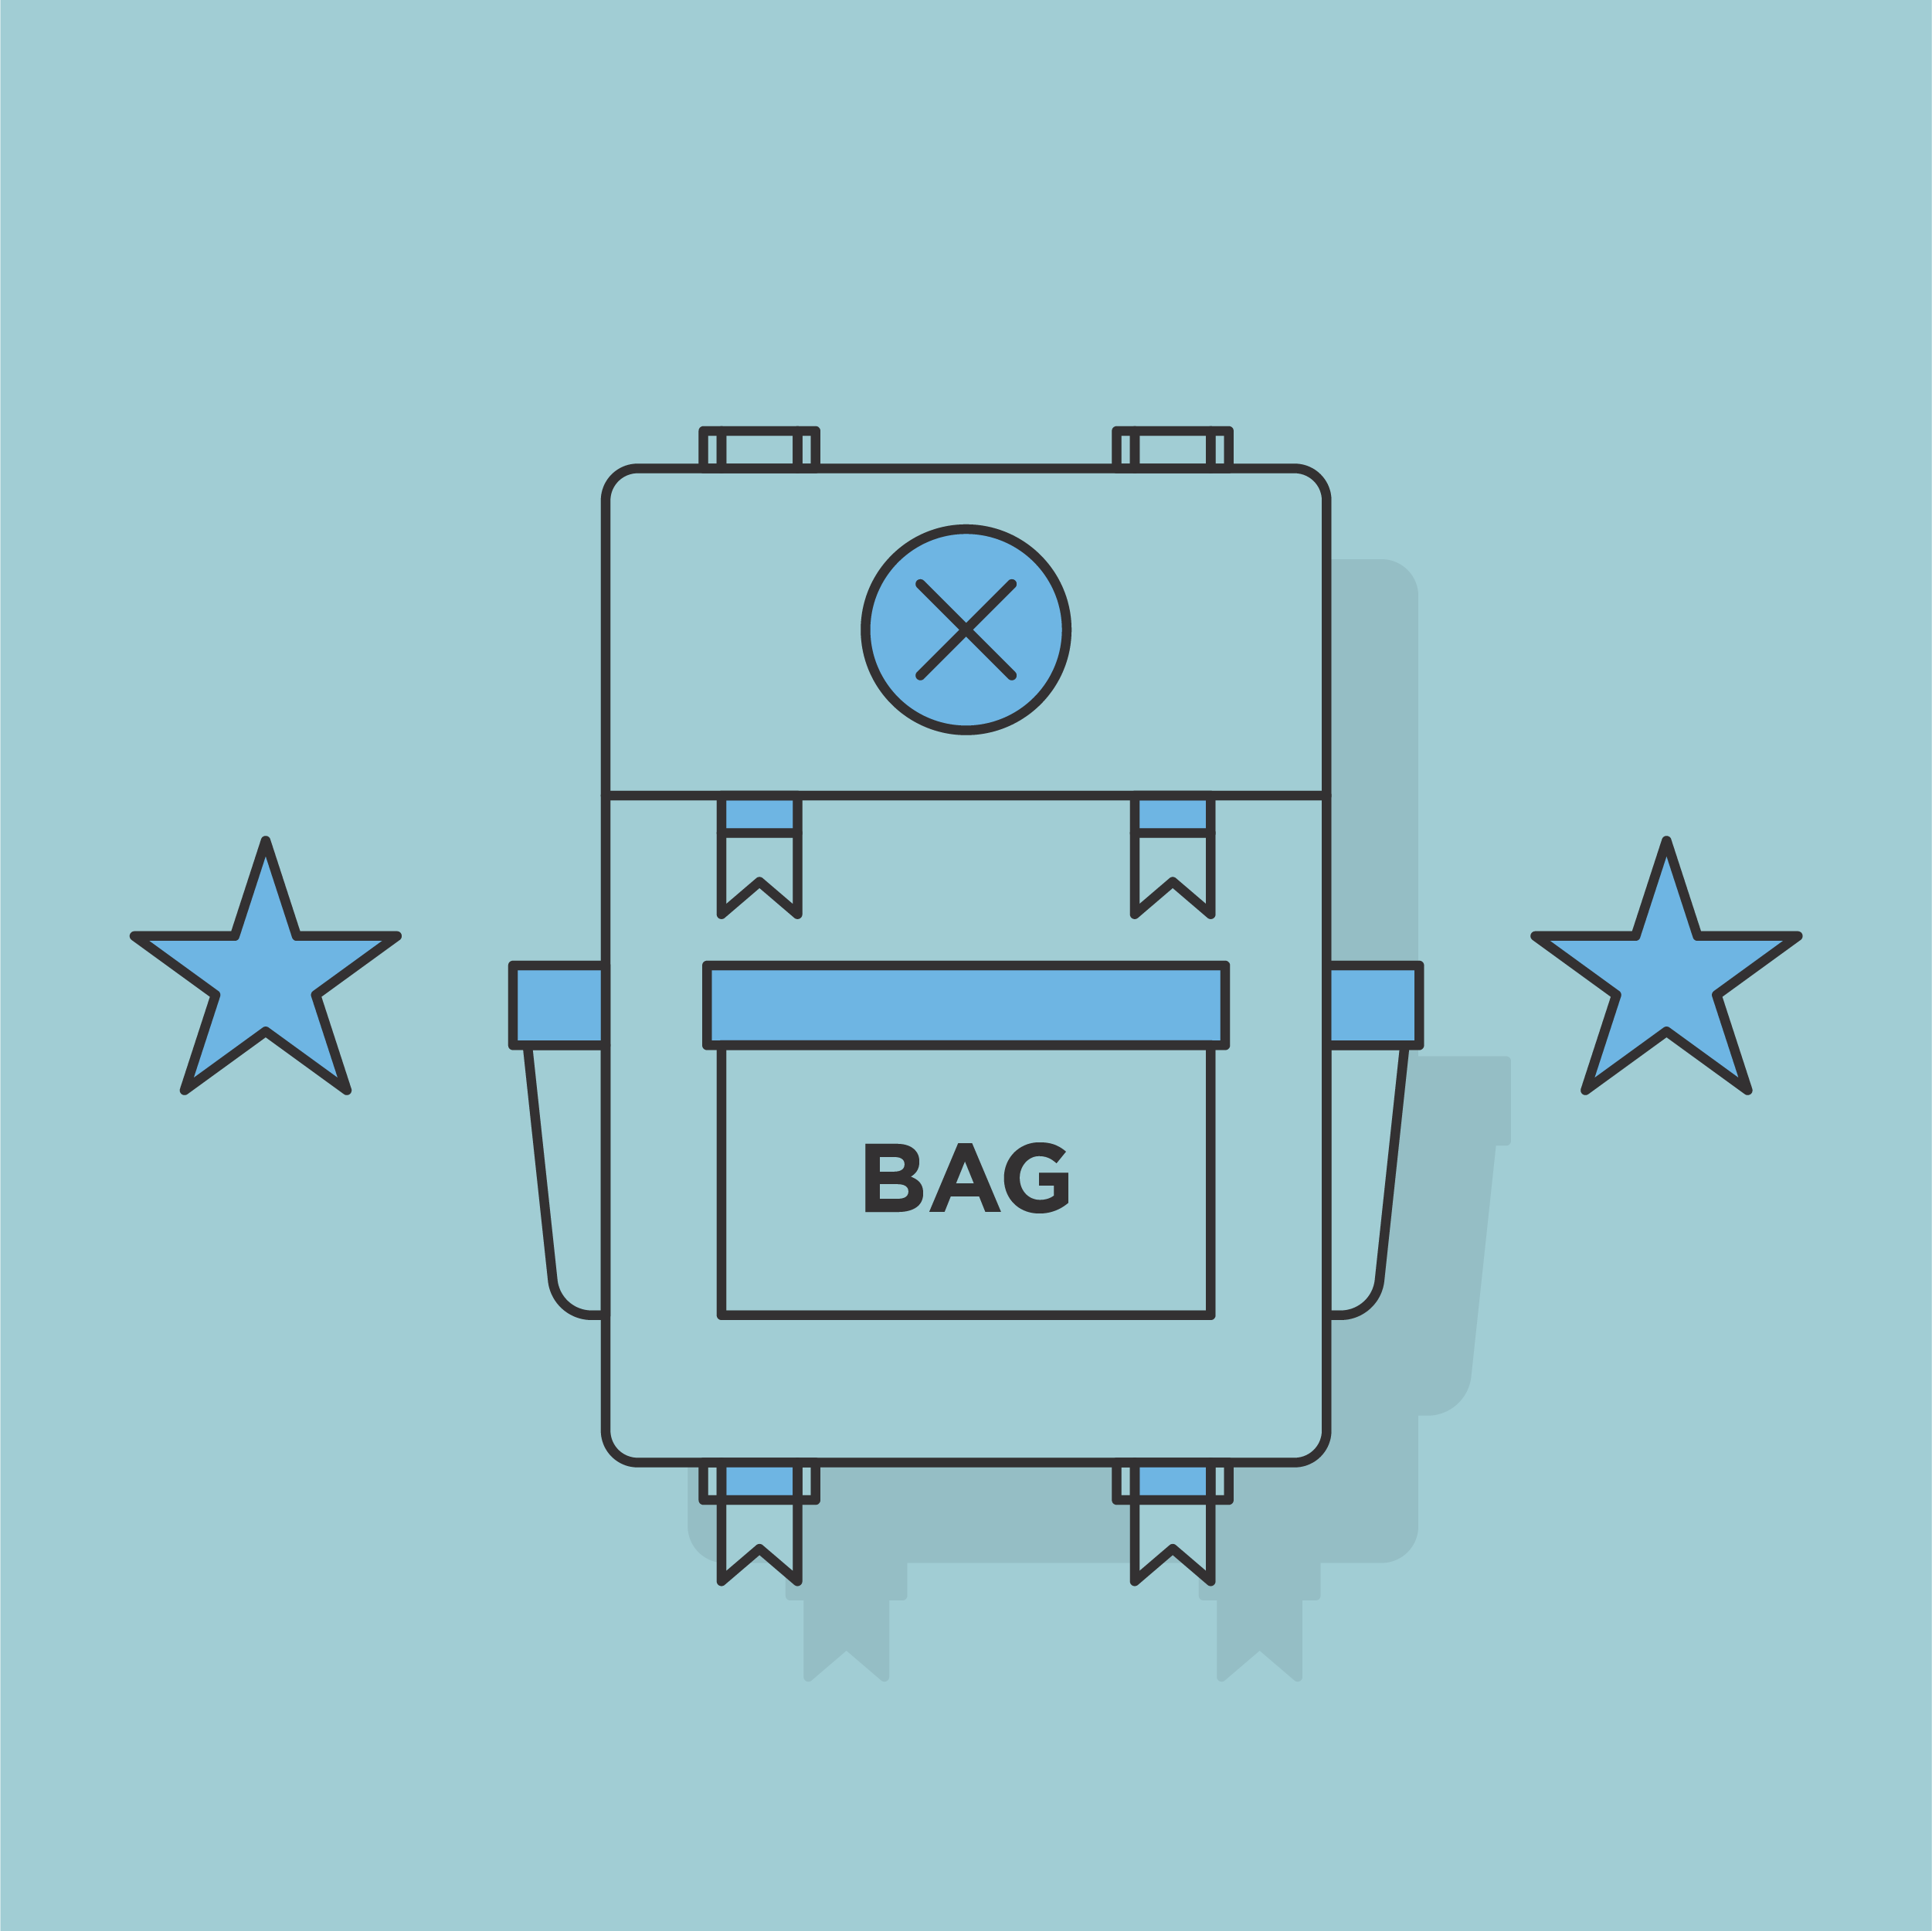 Bag illustration with stars